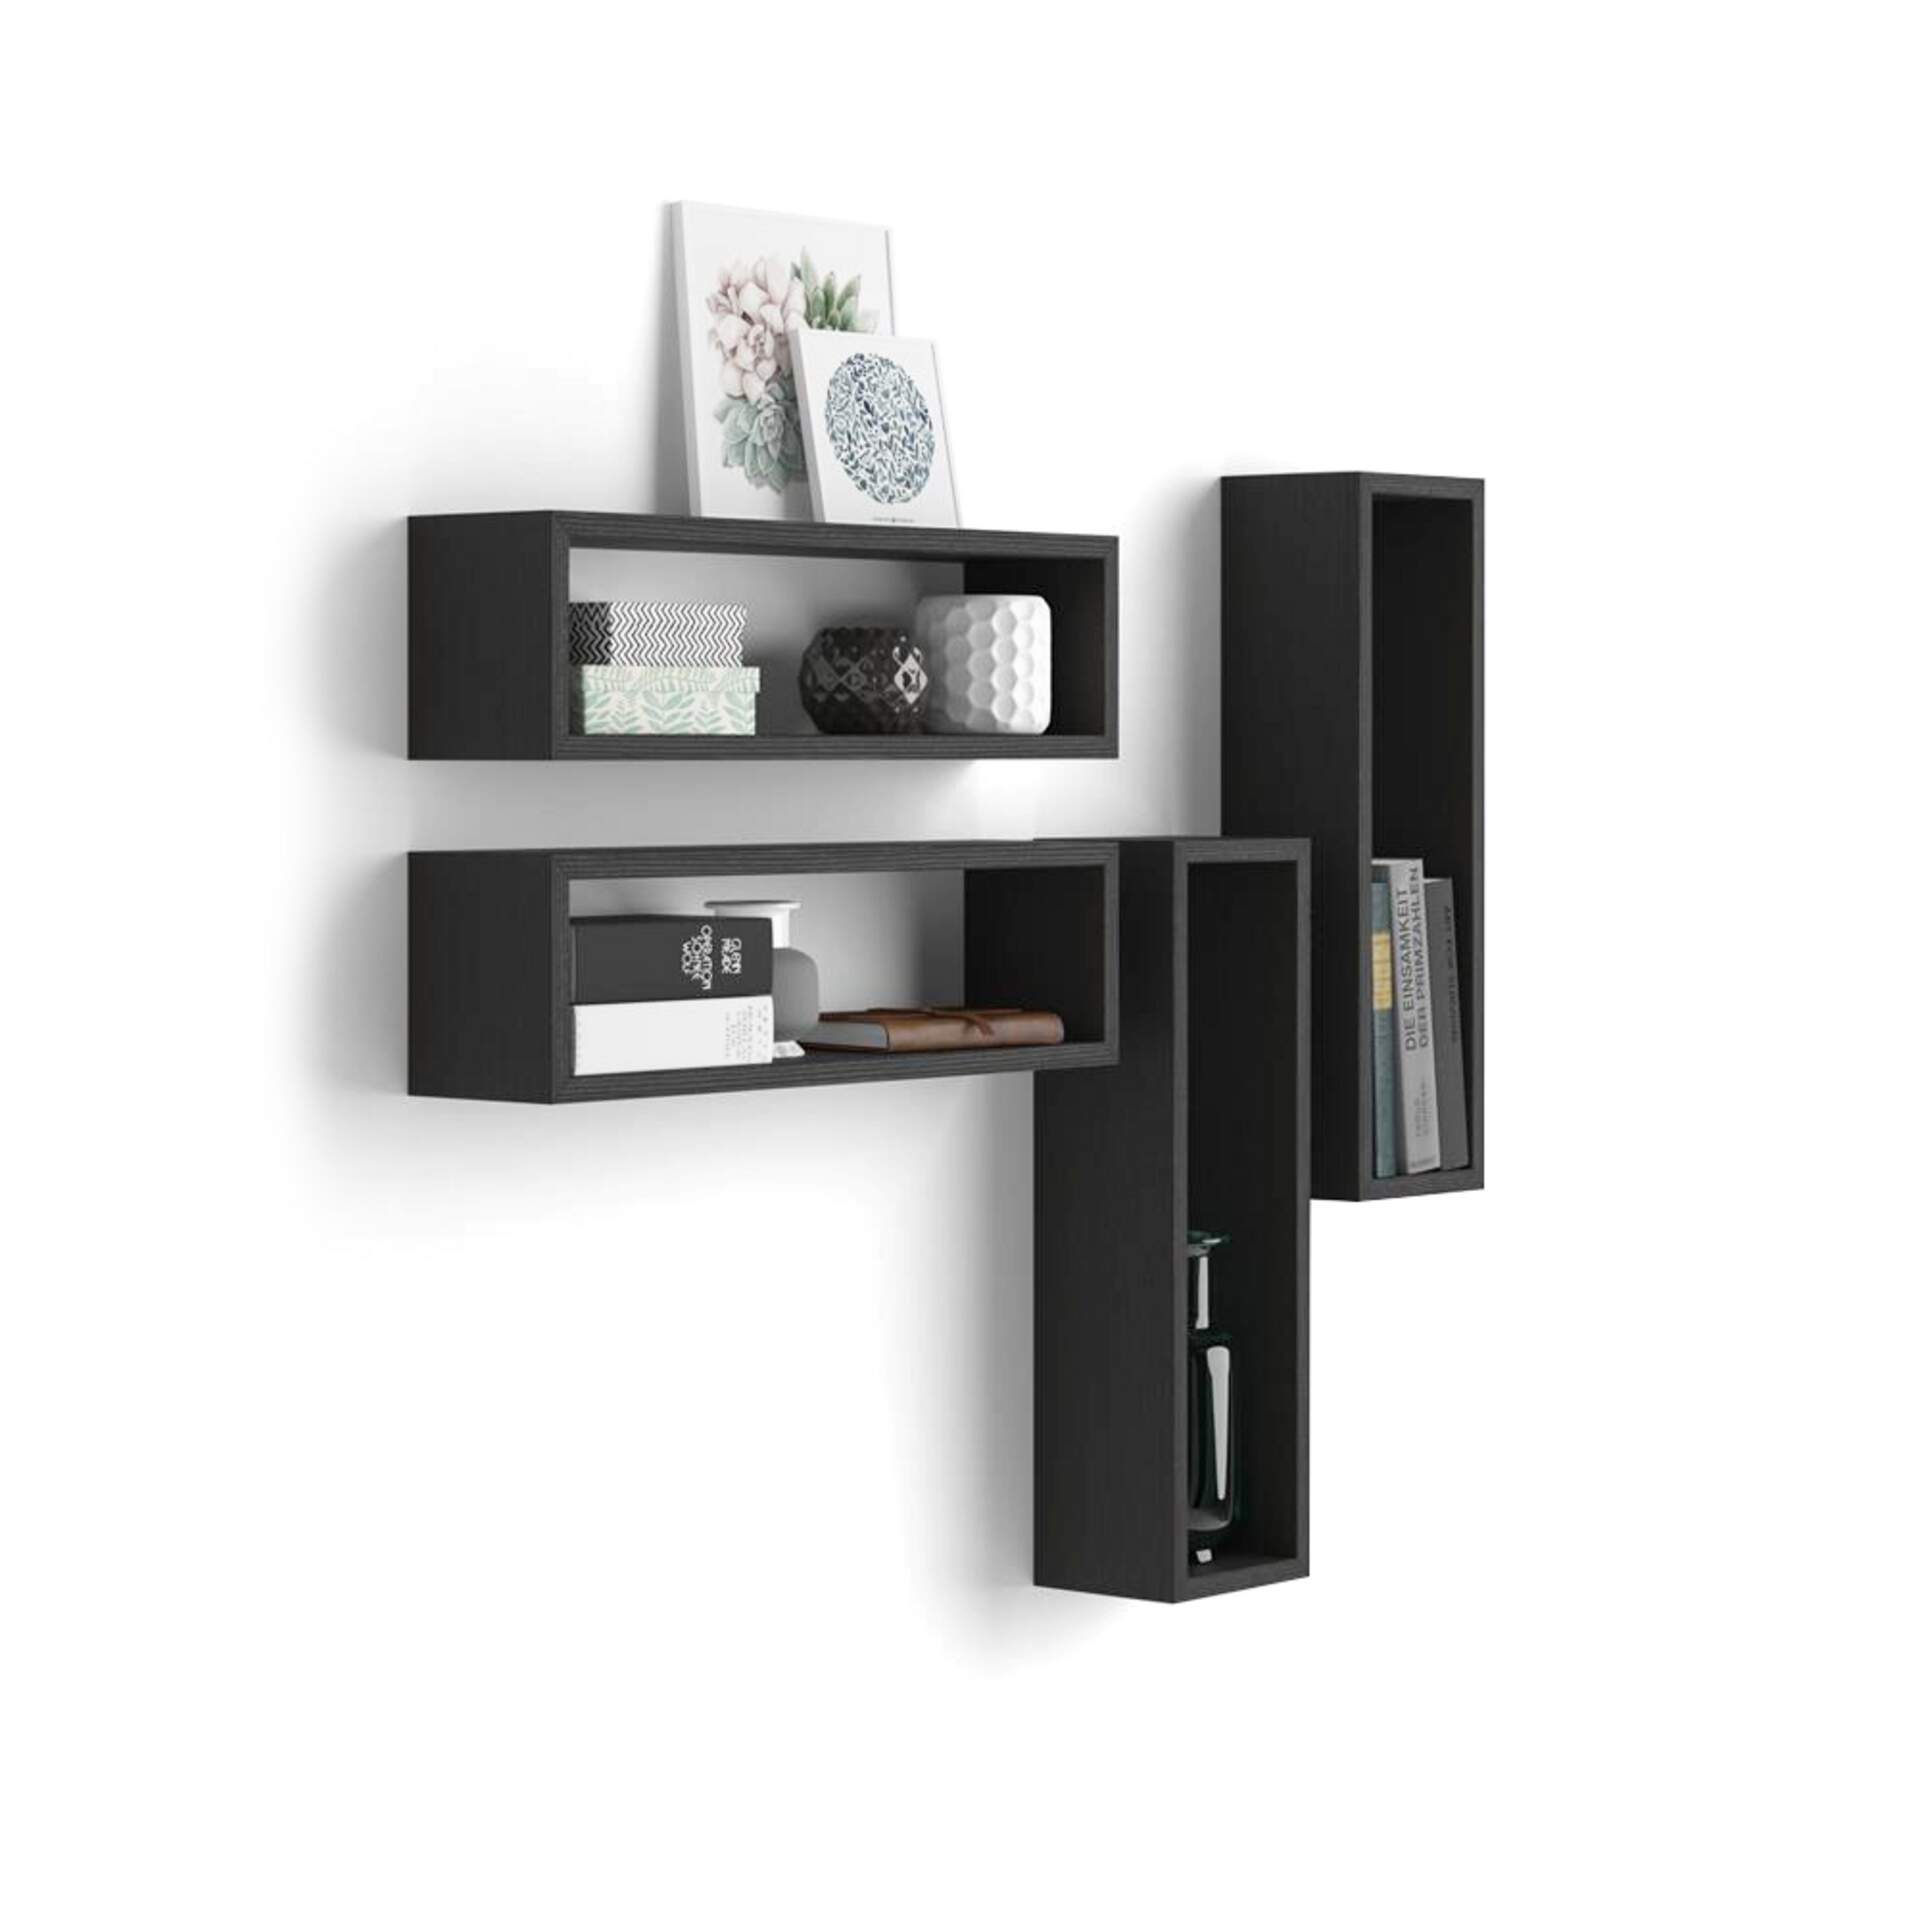 Mobili Fiver Set de 4 estantes en forma de cubo Iacopo, color Madera negra